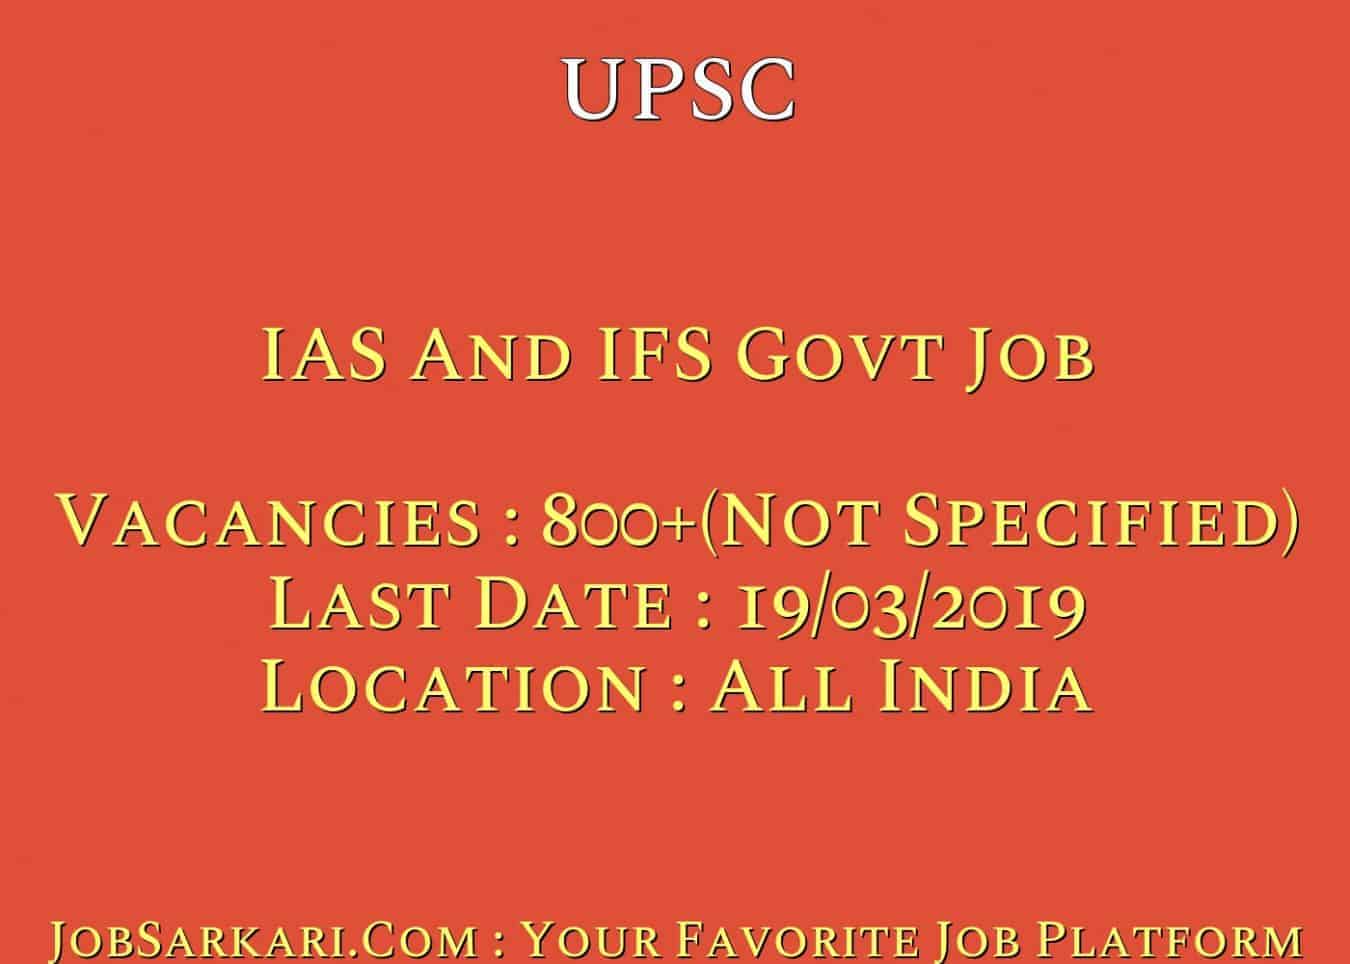 UPSC Recruitment 2019 For IAS And IFS Govt Job